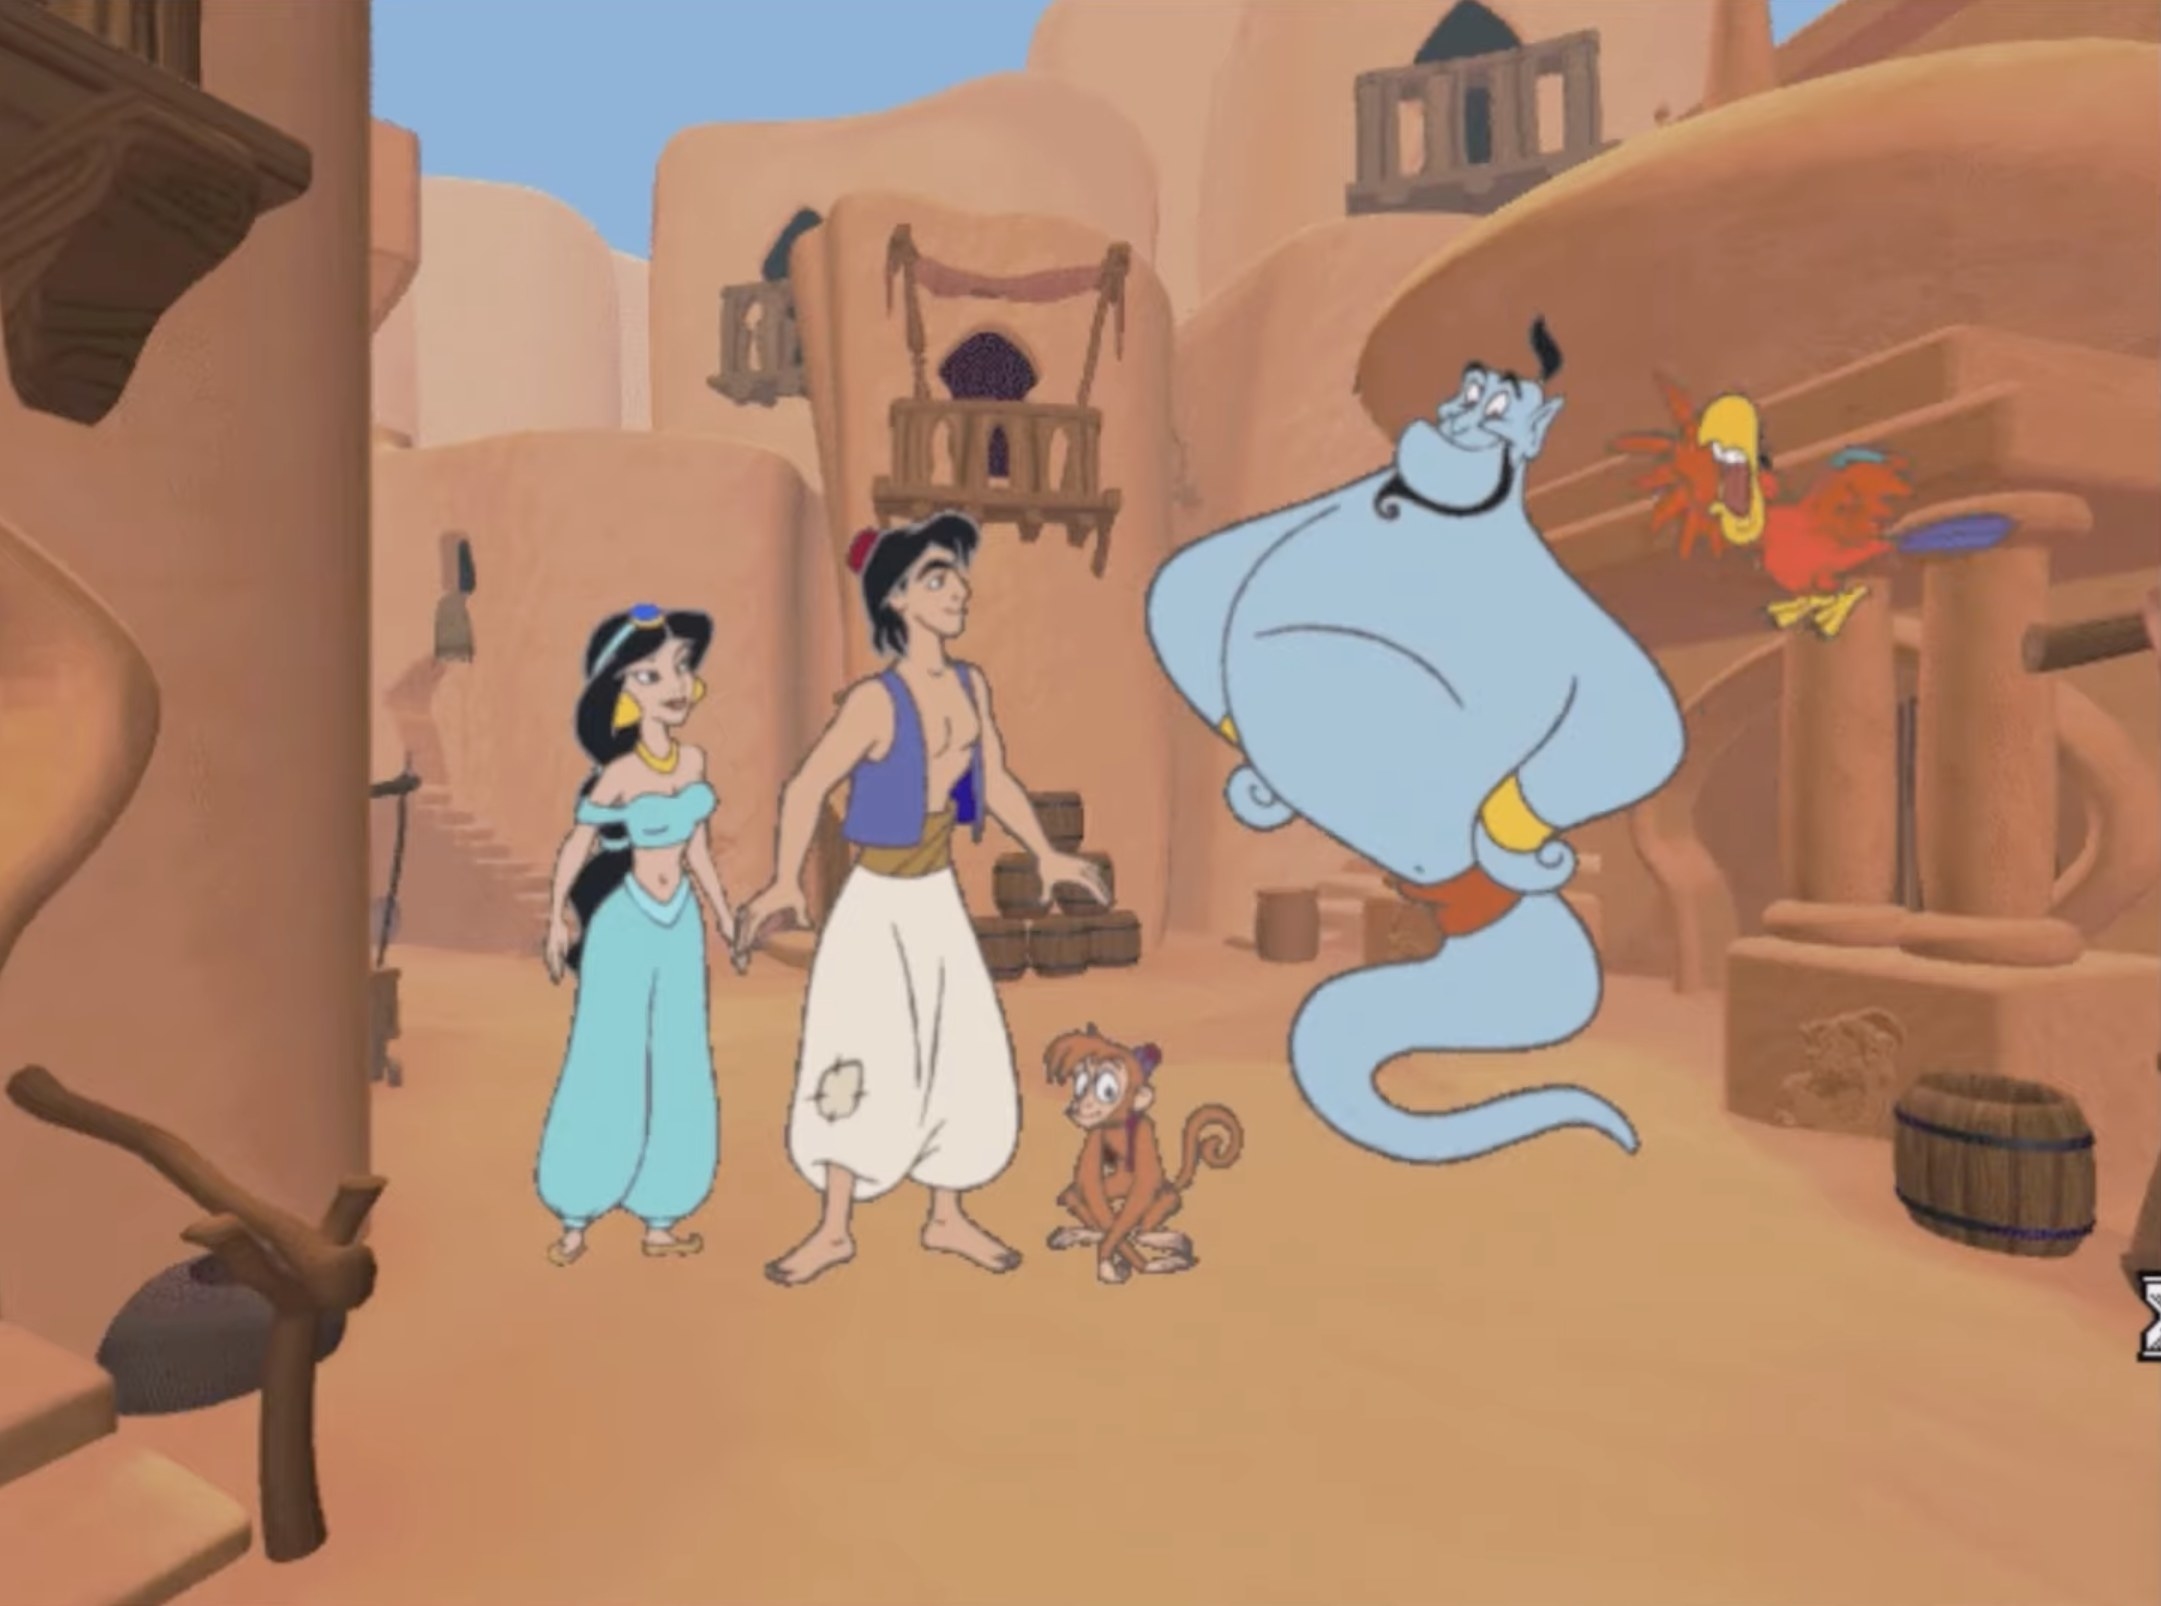 Genie and Iago talk to Aladdin, Jasmine, and Abu in the game&#x27;s intro